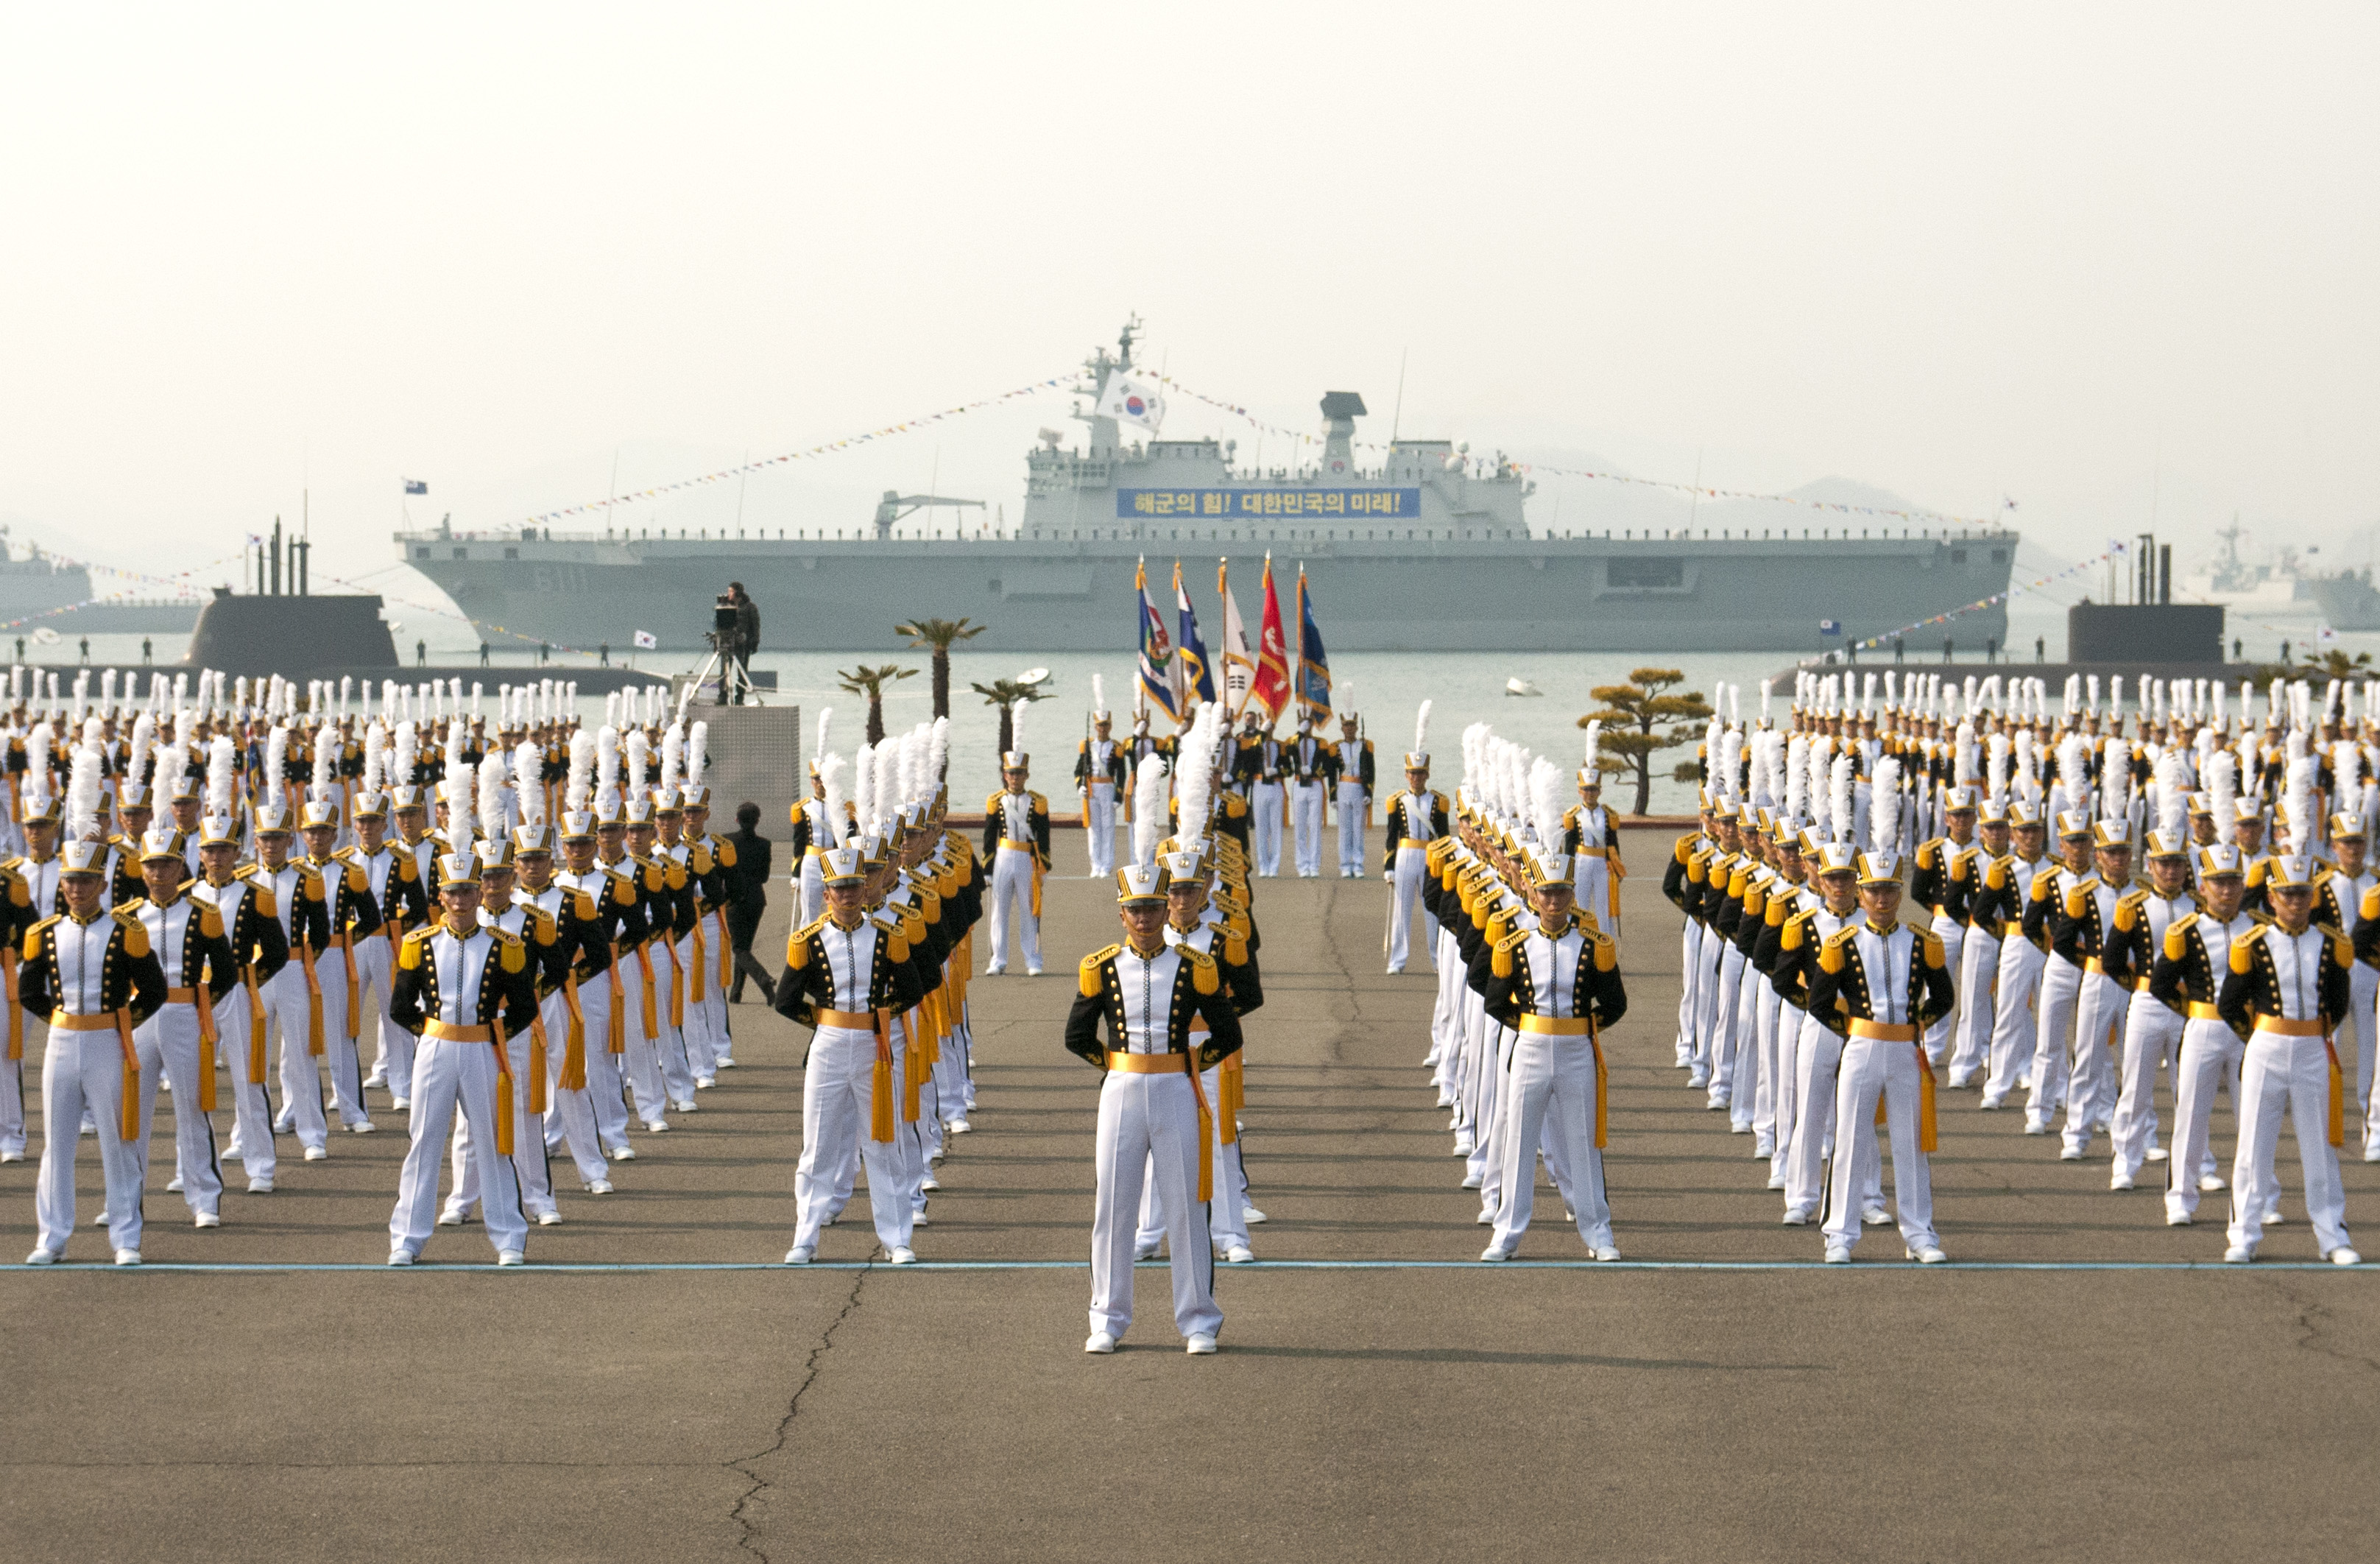 Midshipmen at the ROK Naval Academy graduation.